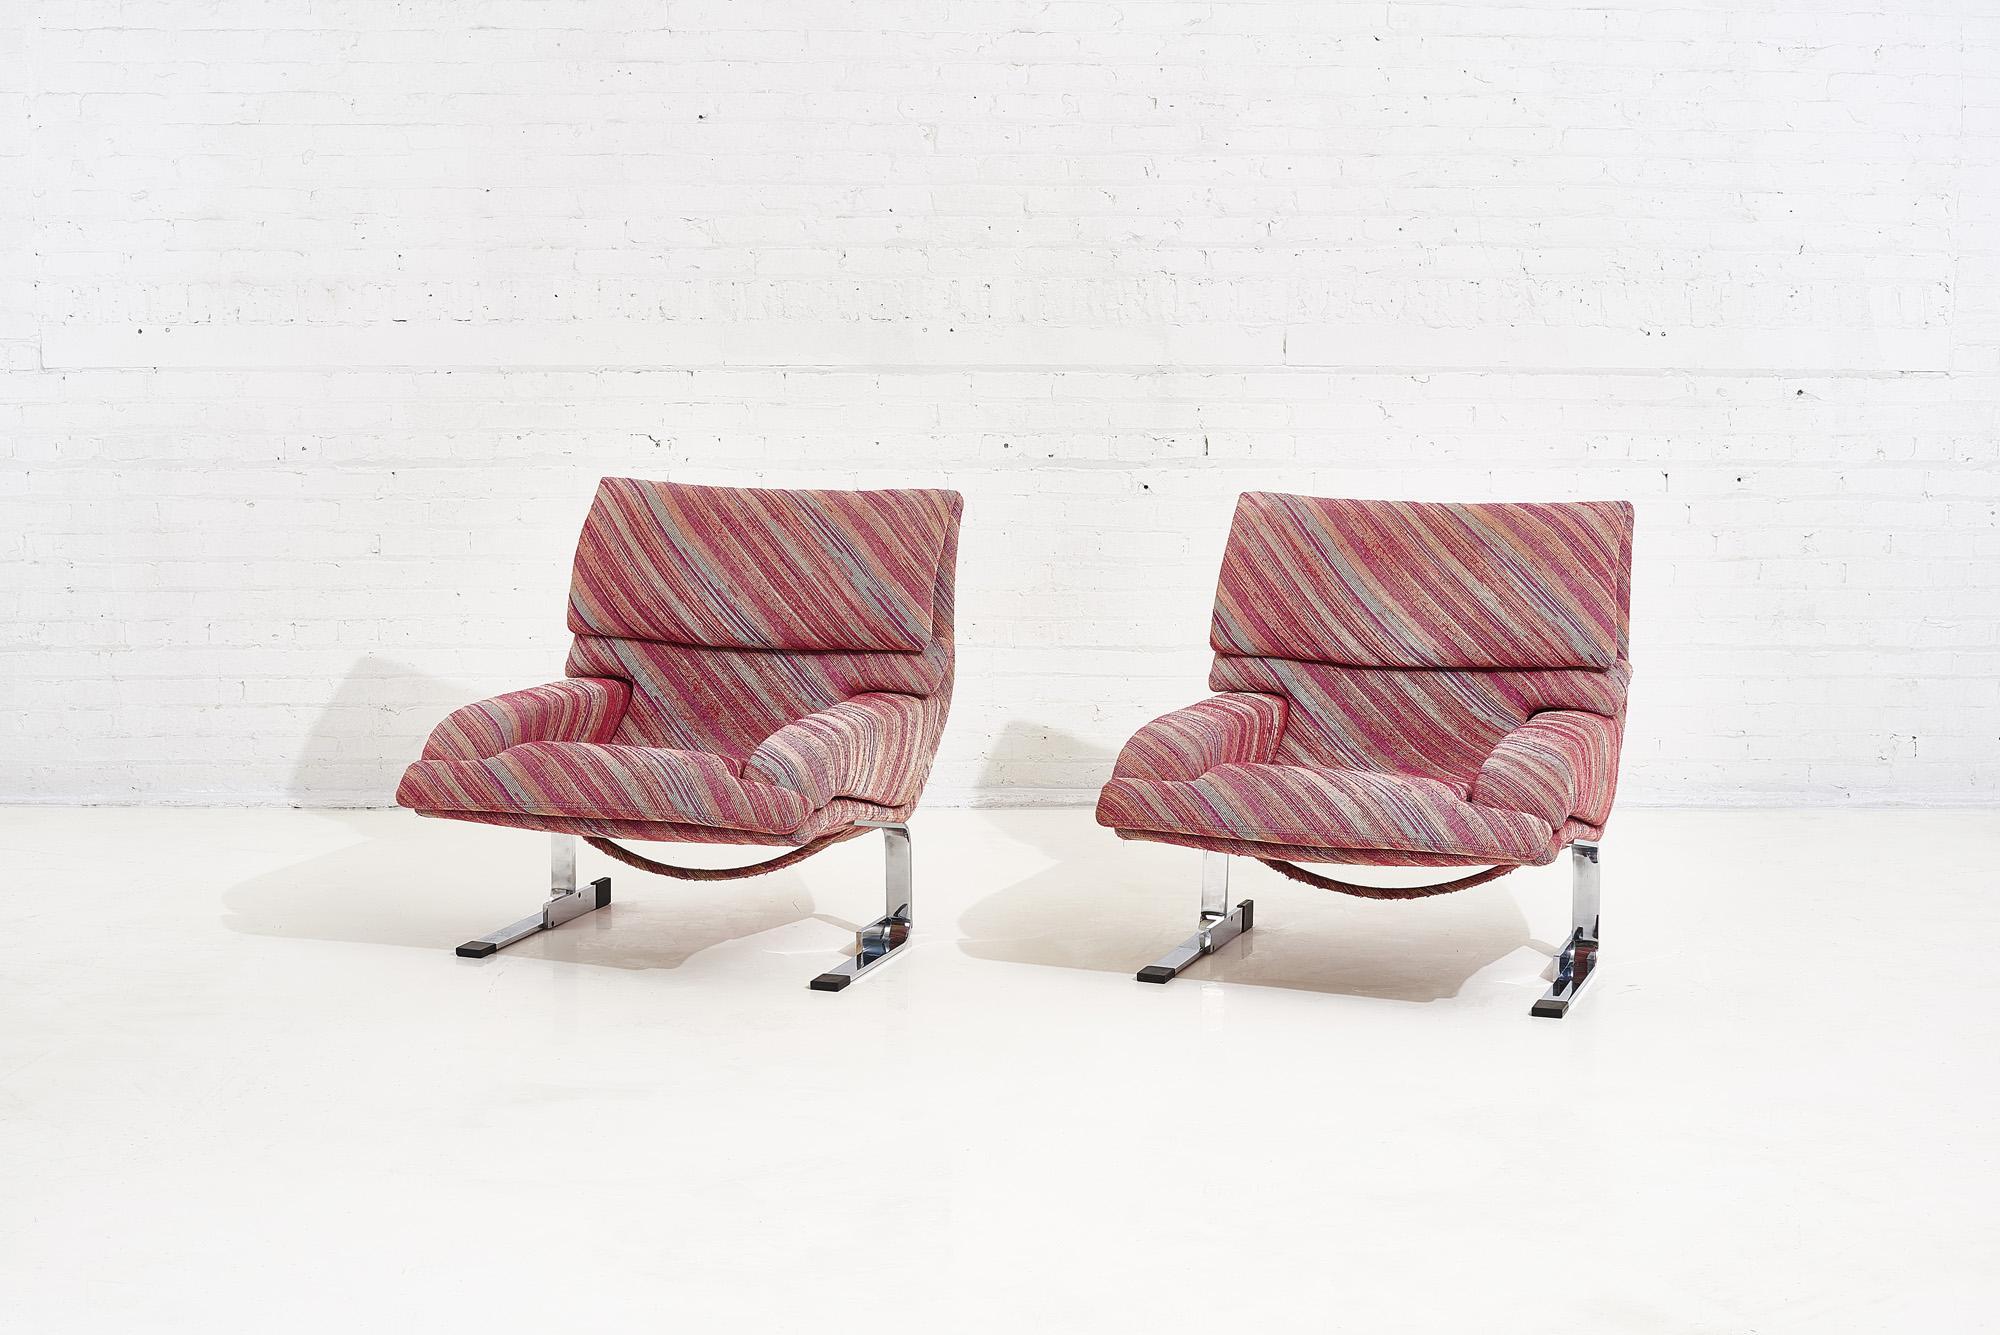 Saporiti Onda lounge chairs Missoni fabric, circa 1970’s. Original.